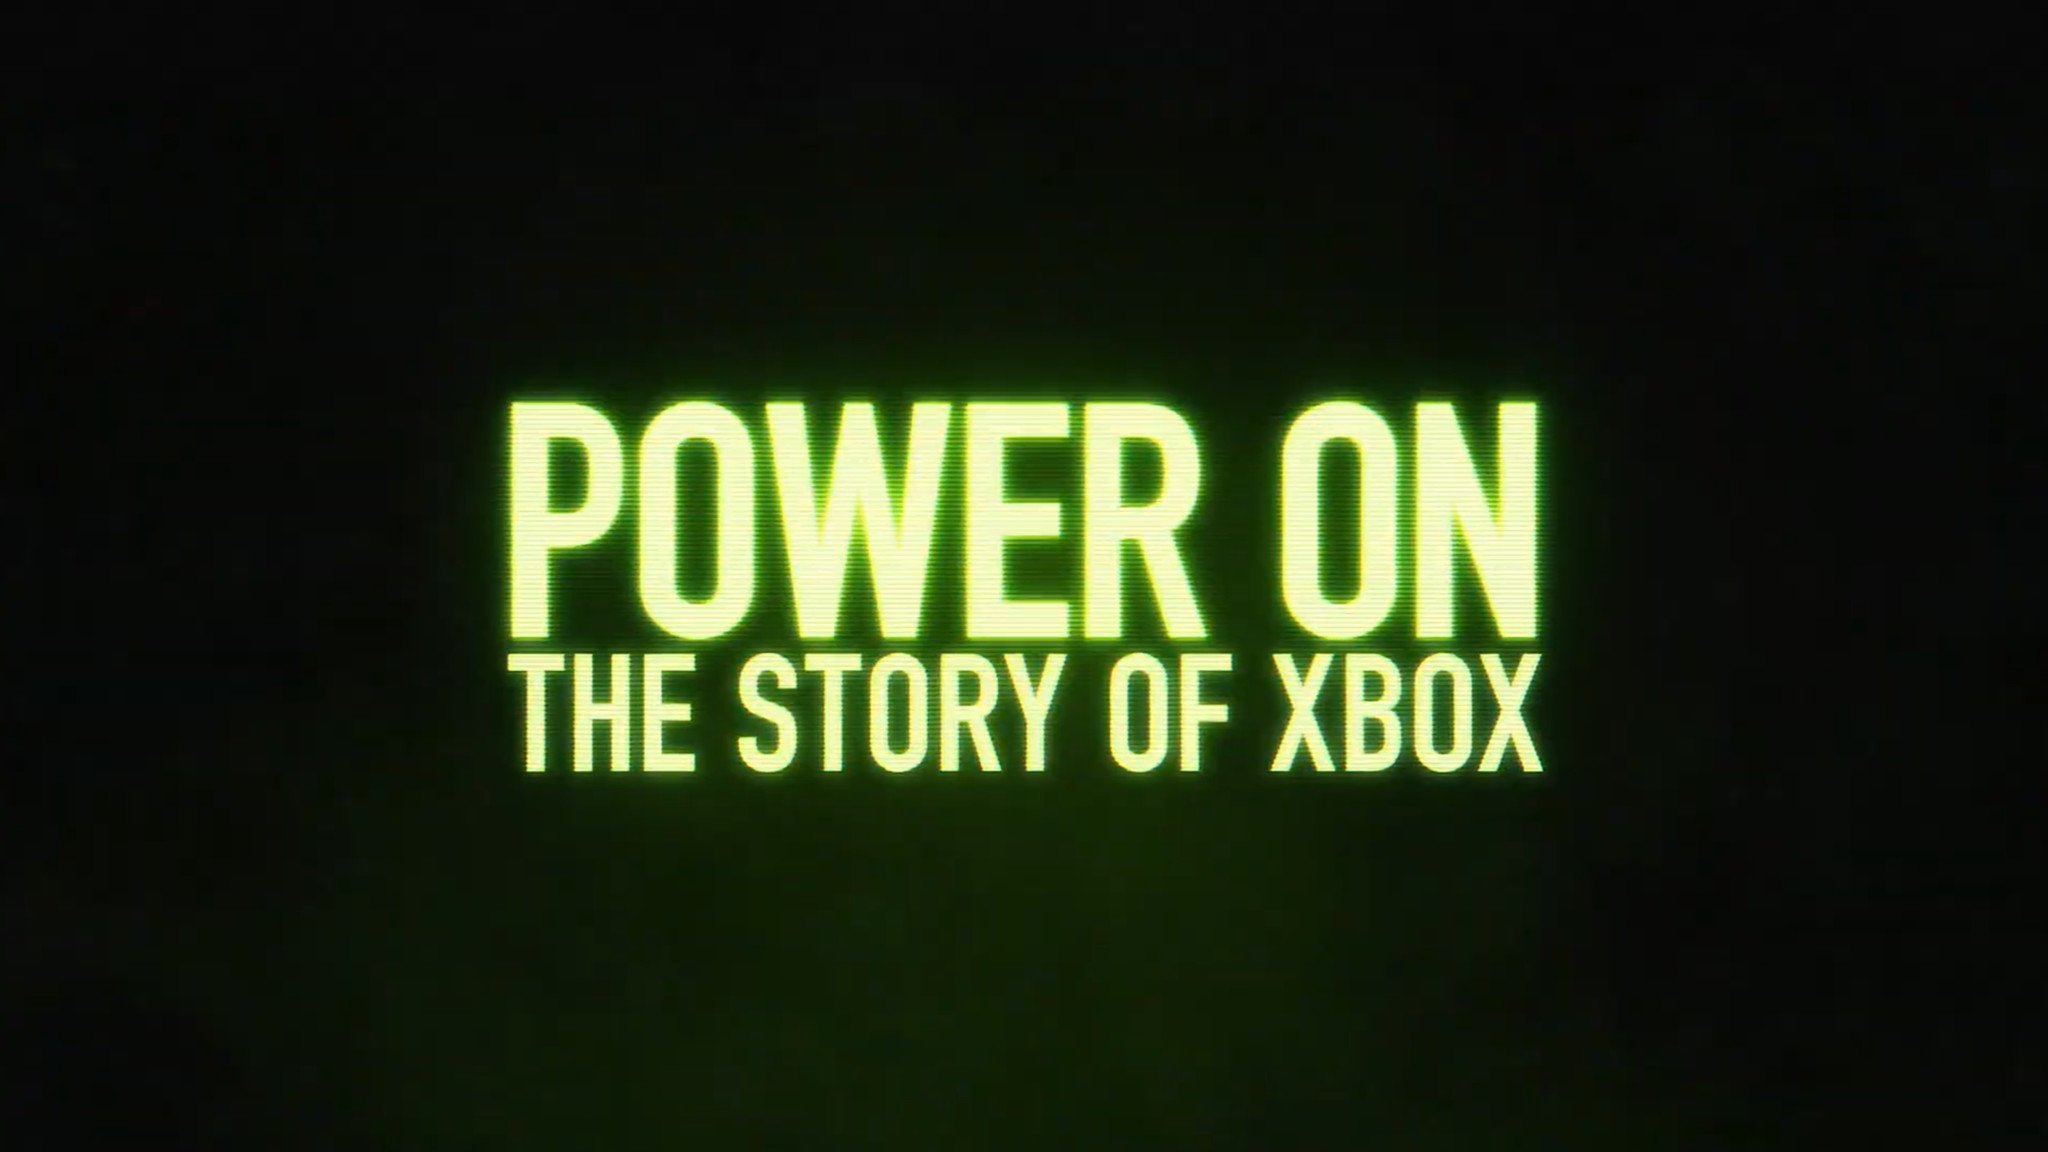 xbox-power-on-documentary-image-01.jpg